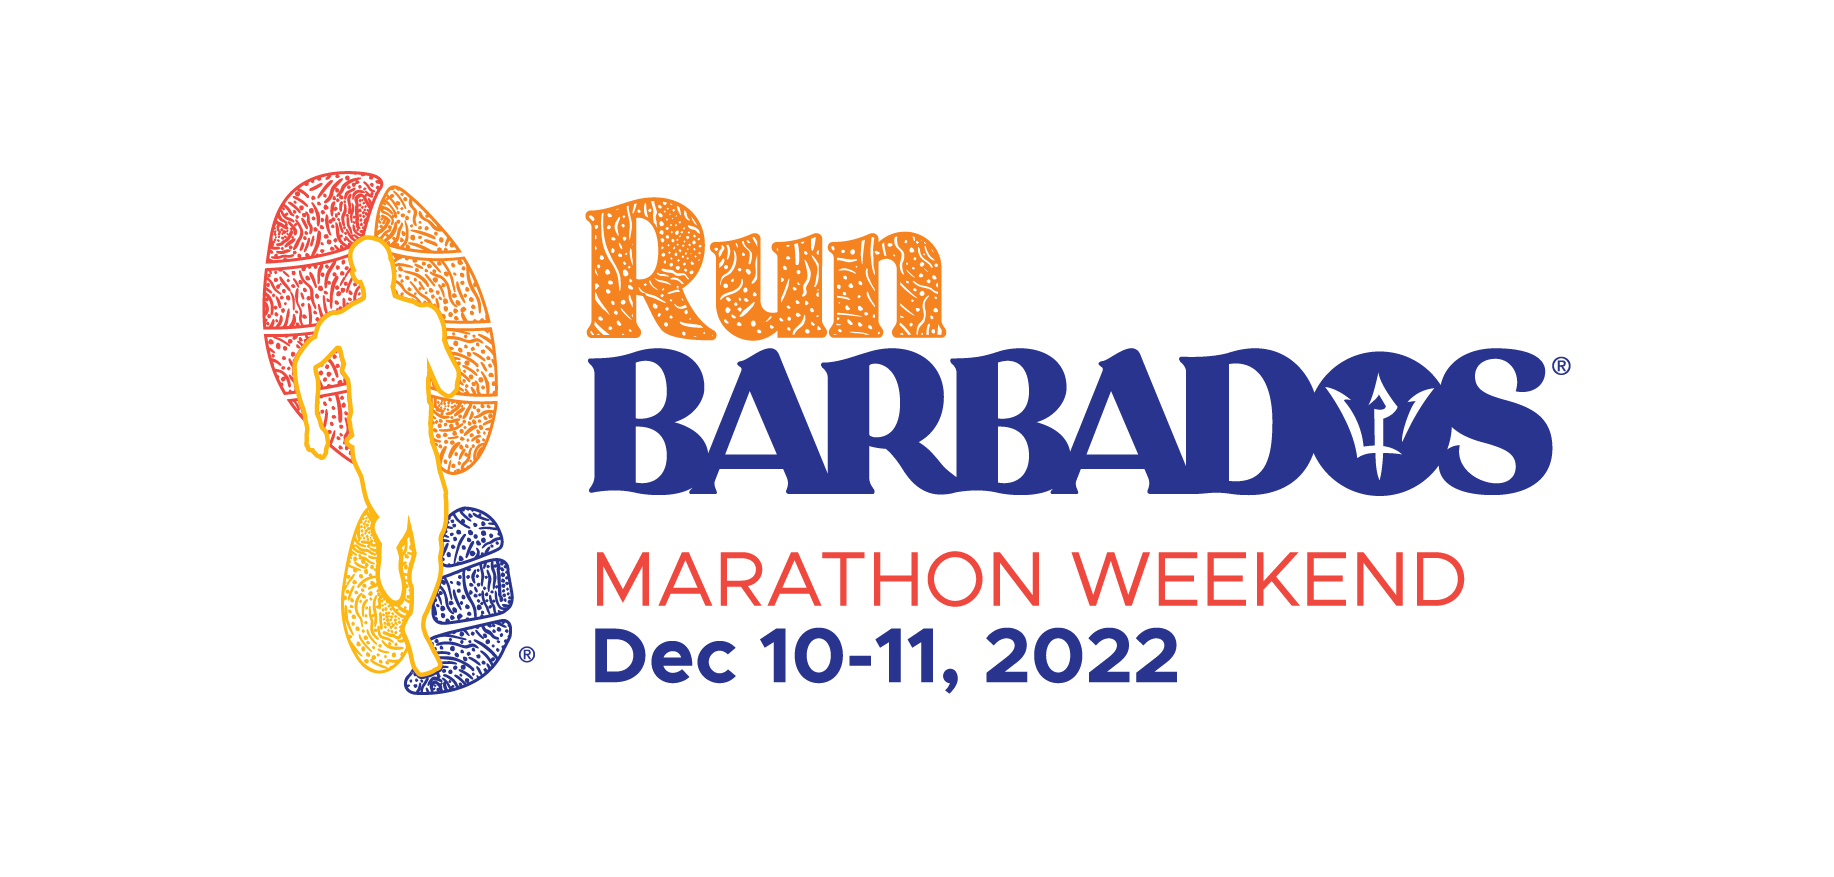 Corra Barbados - fim de semana da maratona